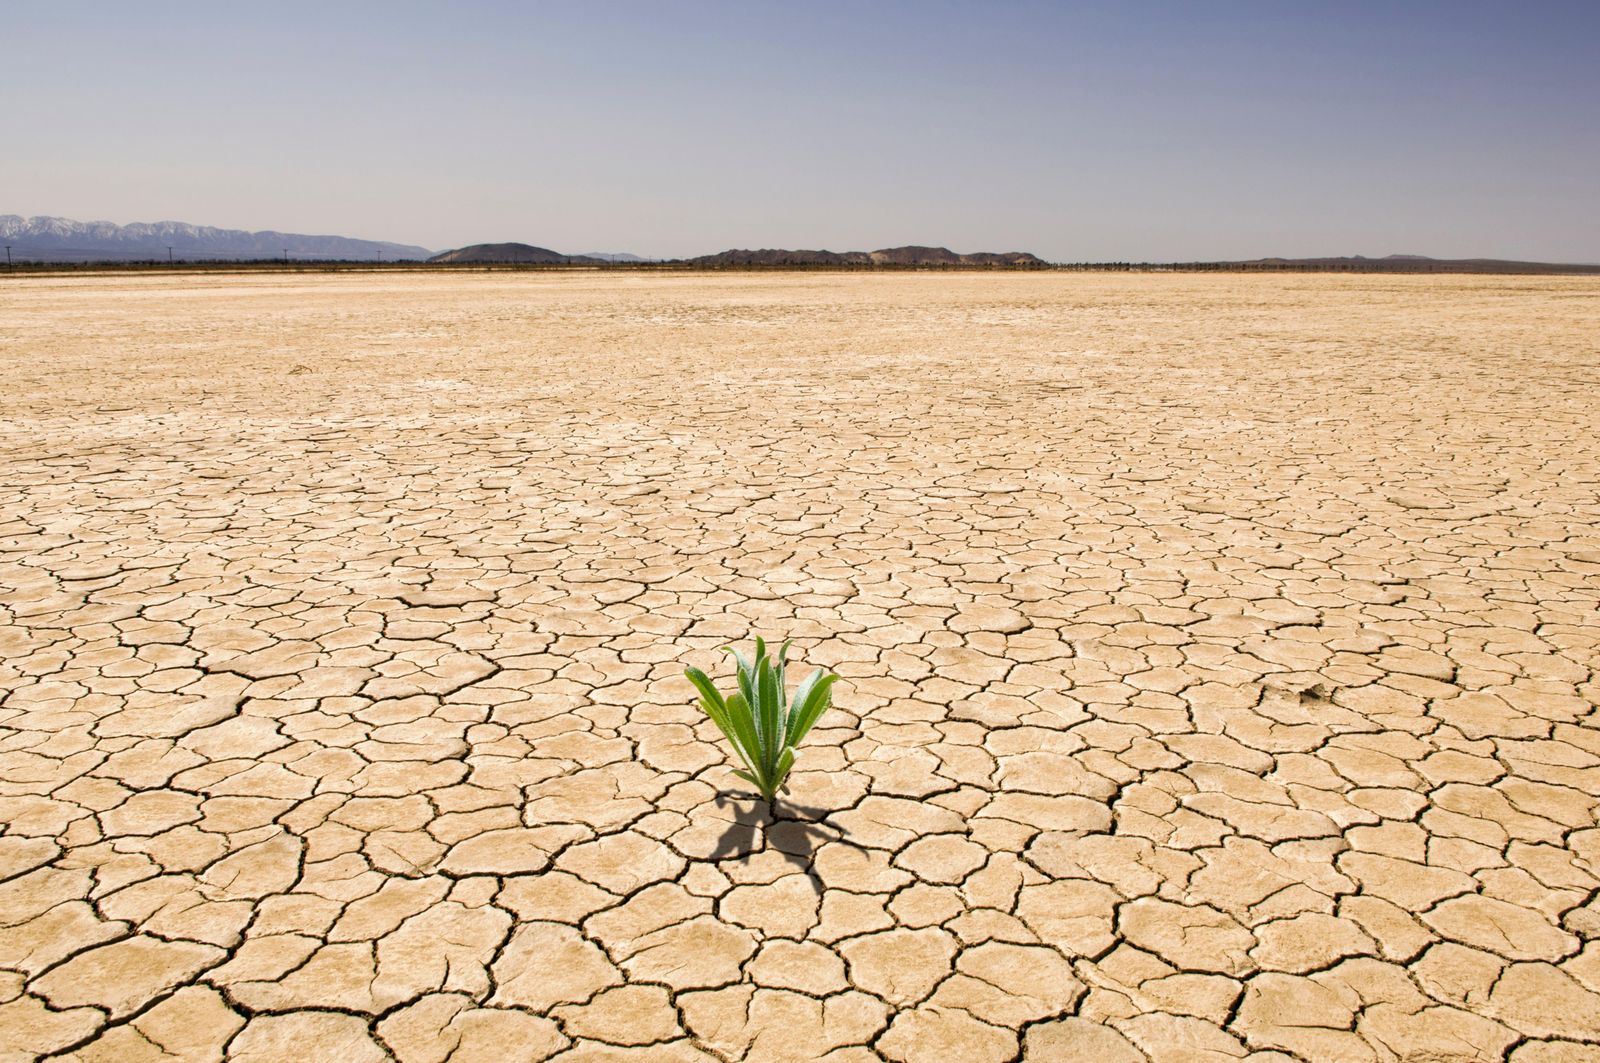 Dry plants. Засуха. Опустынивание земель. Пустыня засуха. Пустынная земля.